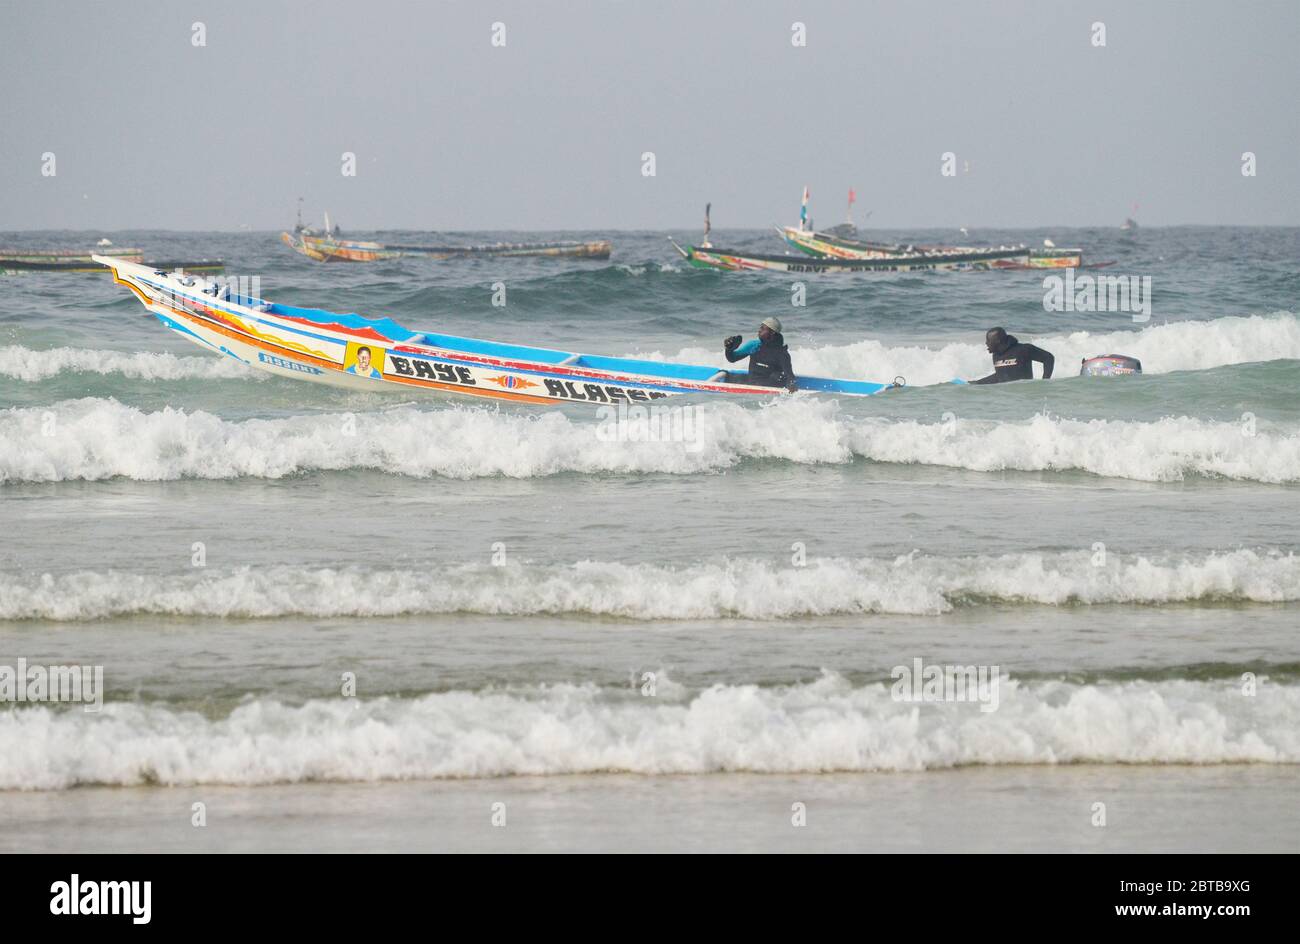 A pirogue (artisanal fishing boat) braving the surf at Yoff beach, Dakar, Senegal Stock Photo